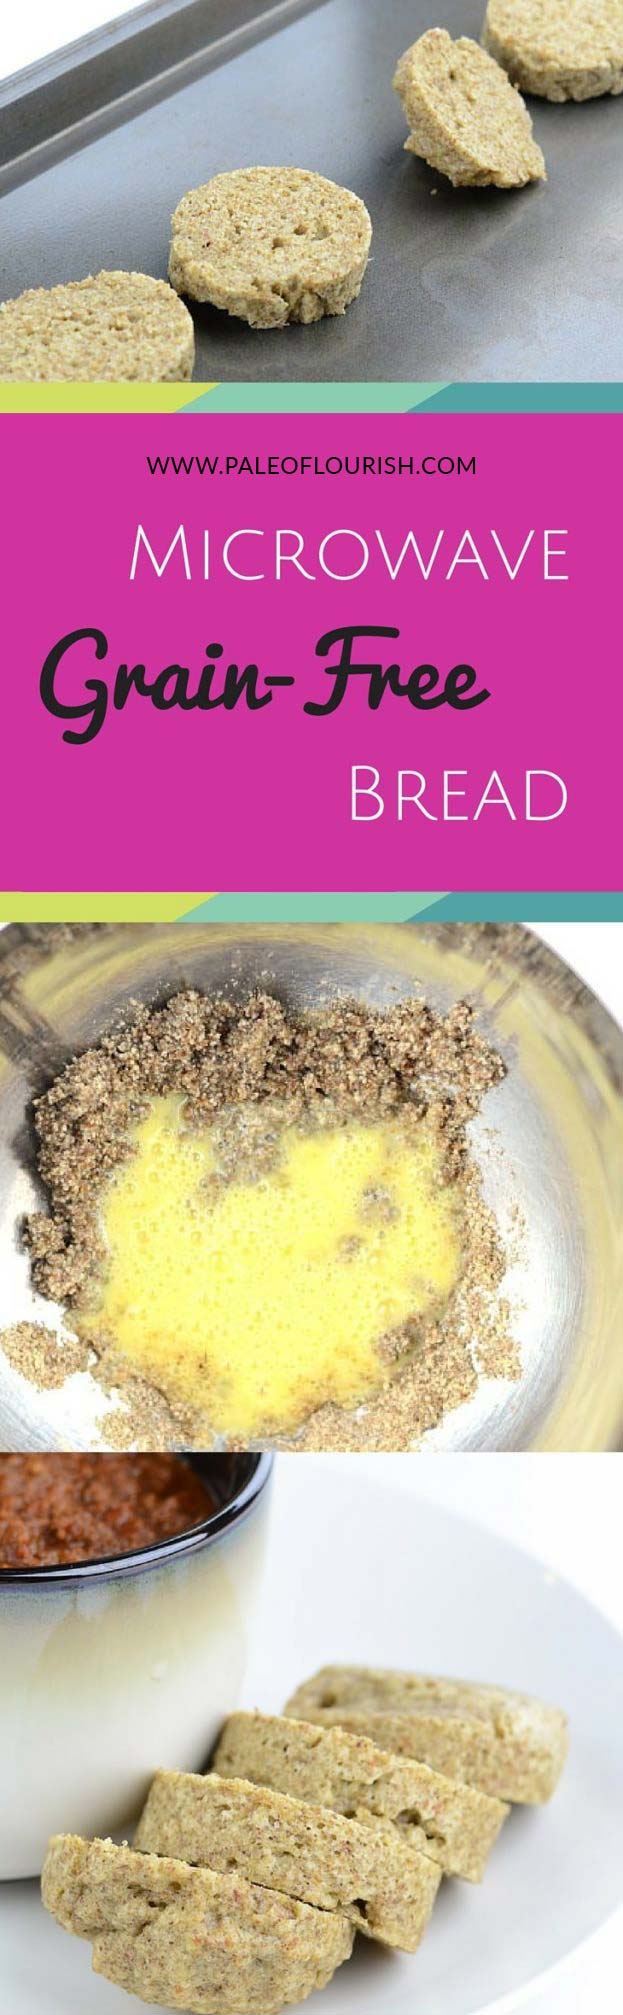 Microwave Paleo Bread #paleo #recipes #gluten-free https://paleoflourish.com/microwave-paleo-bread/